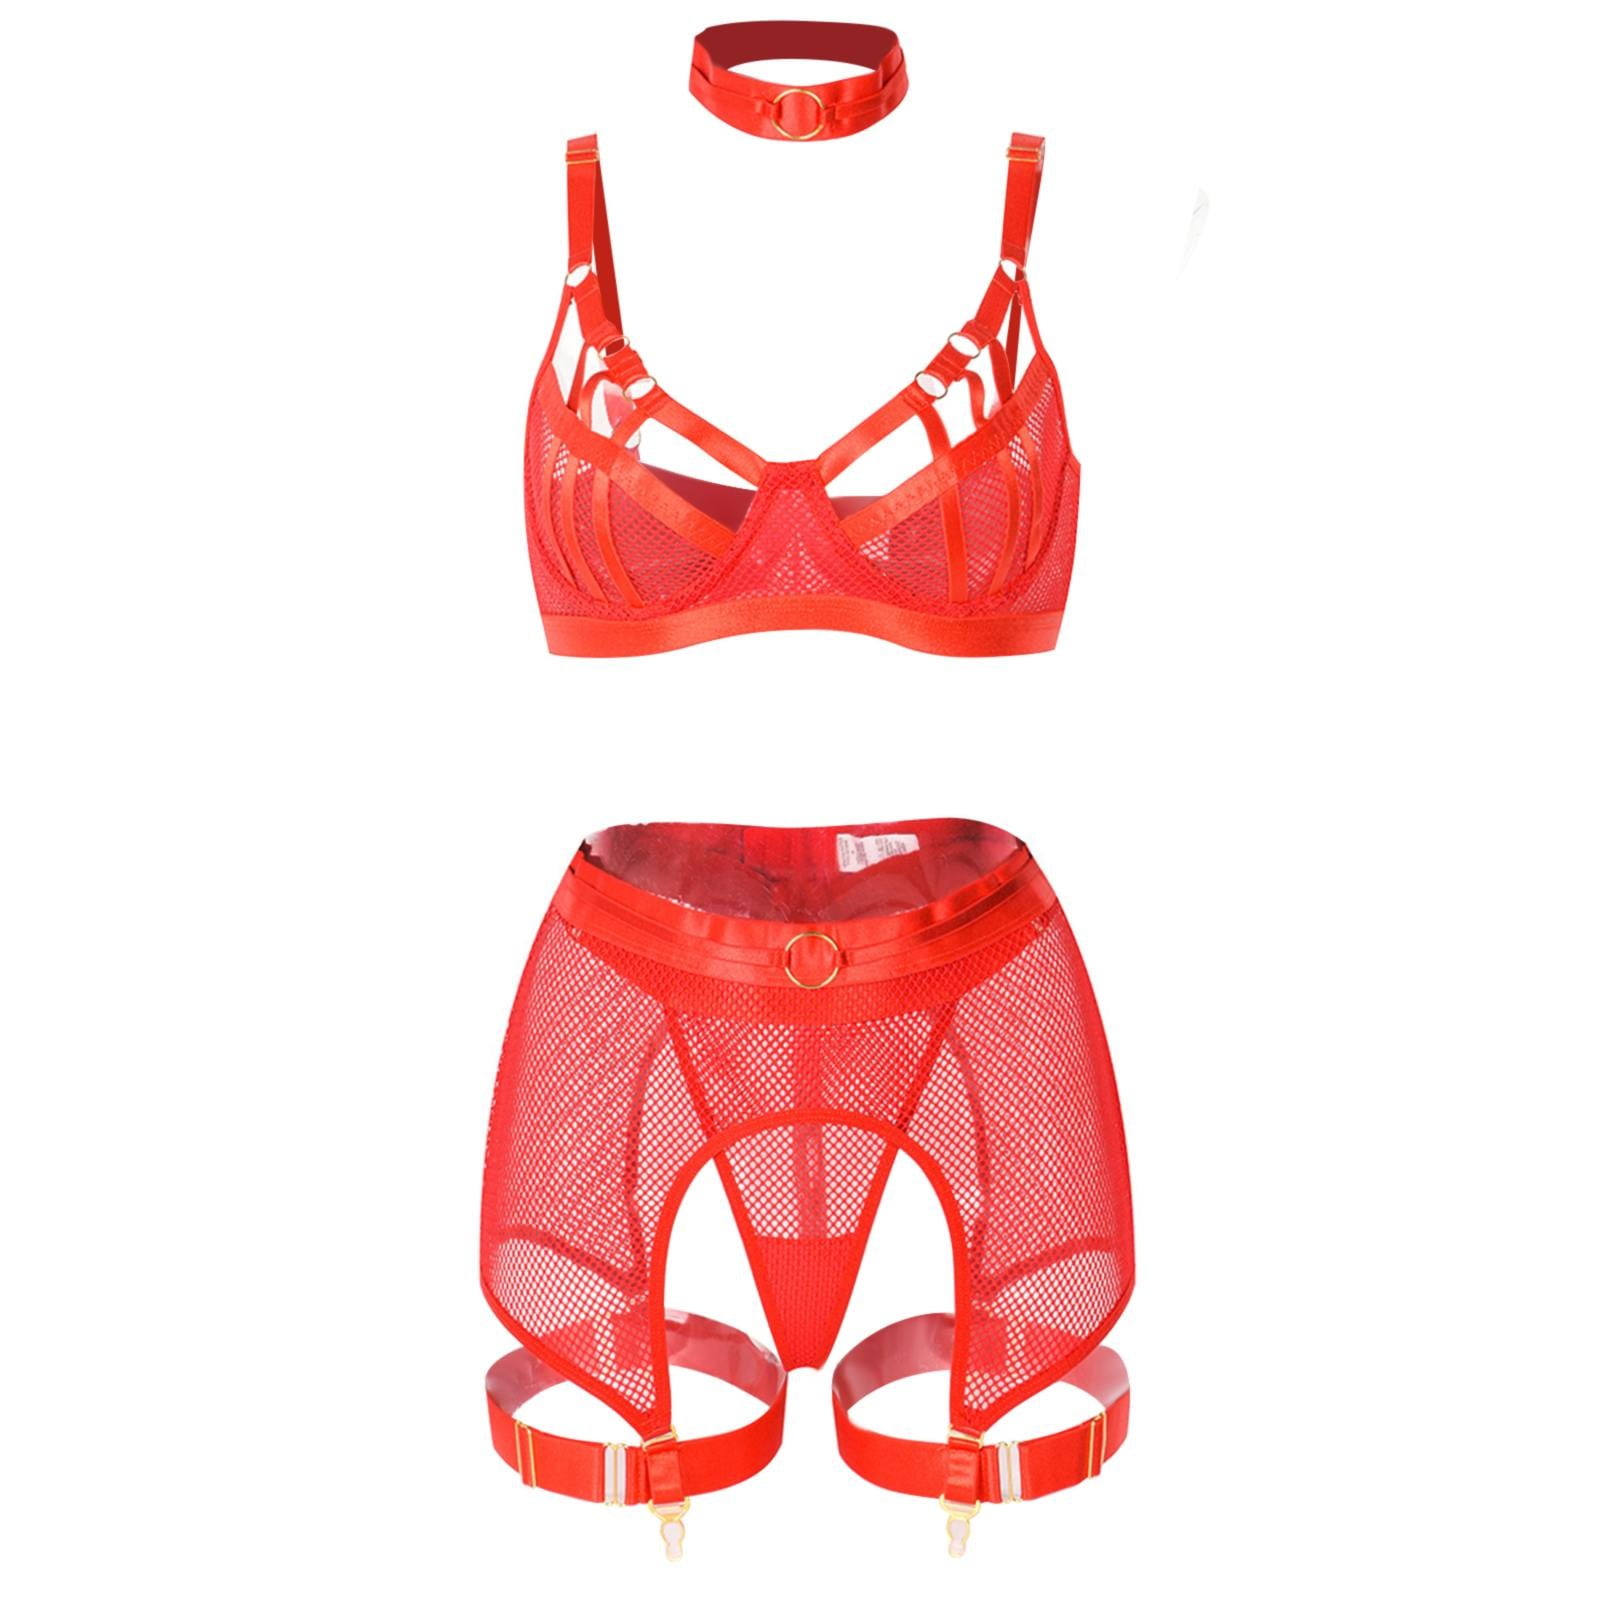 Aayomet Plus Size Lingerie Women Lingerie Hot Lace Bra Set Red Teddy Briefs  Bandage Underwear Set Dress Push Up Bra,Red M